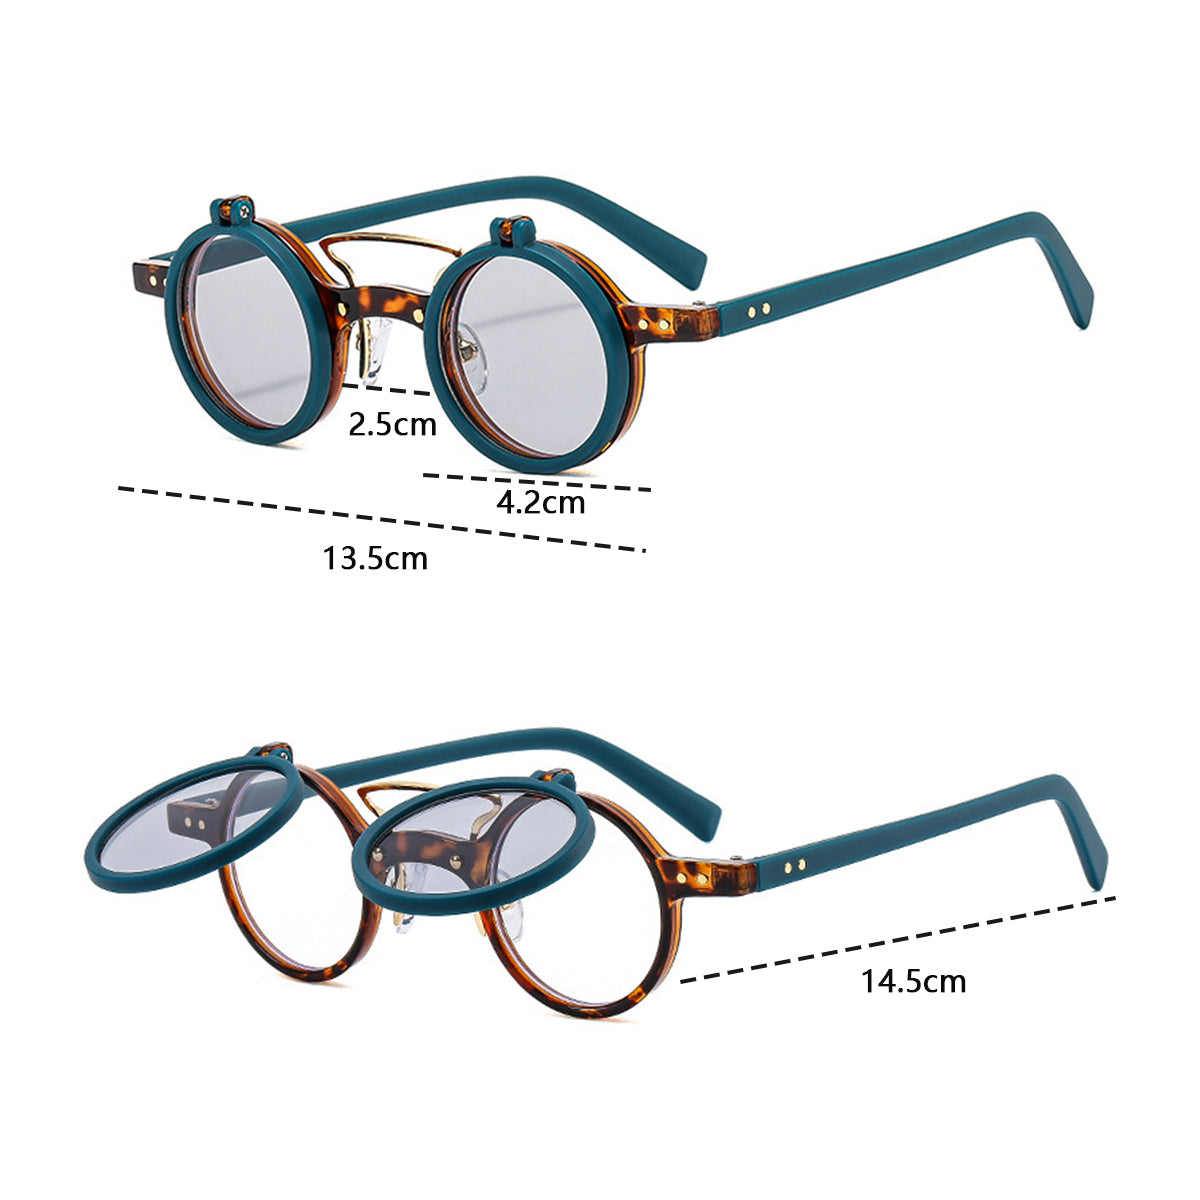 Ducky- the Round Frame Green and Tortoiseshell Flip Lens 1930s Style Sunglasses